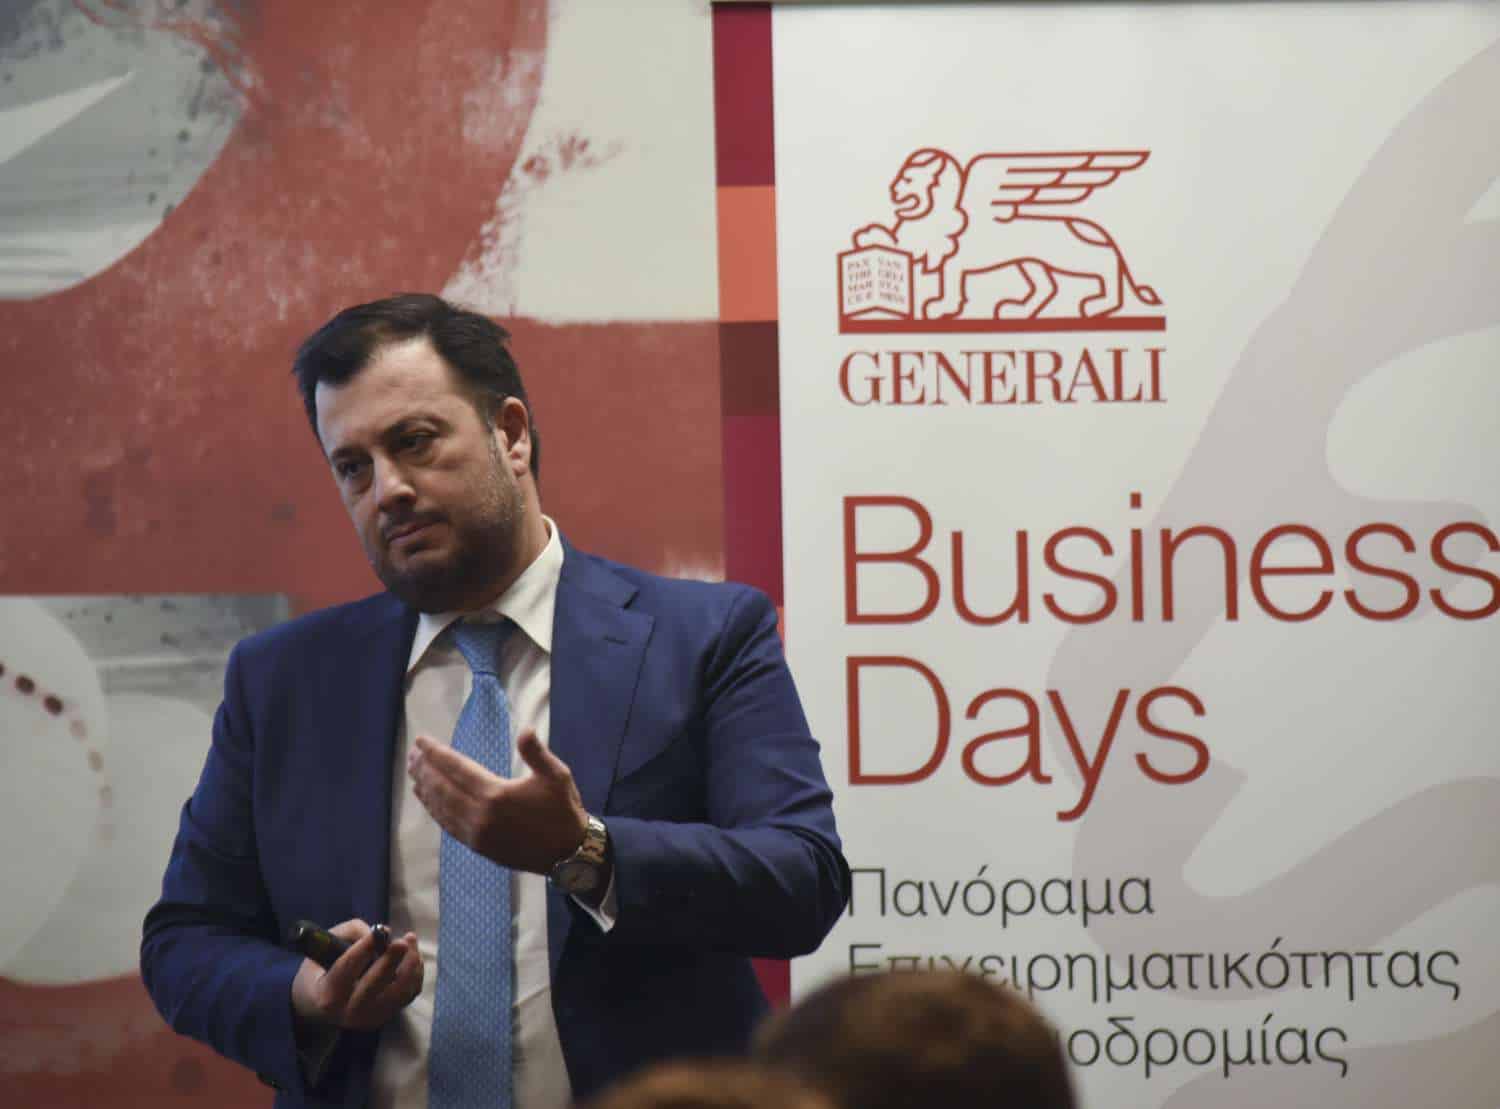 Generali Business Days 2019: H νέα γενιά υποδέχεται την ασφάλιση του αύριο!